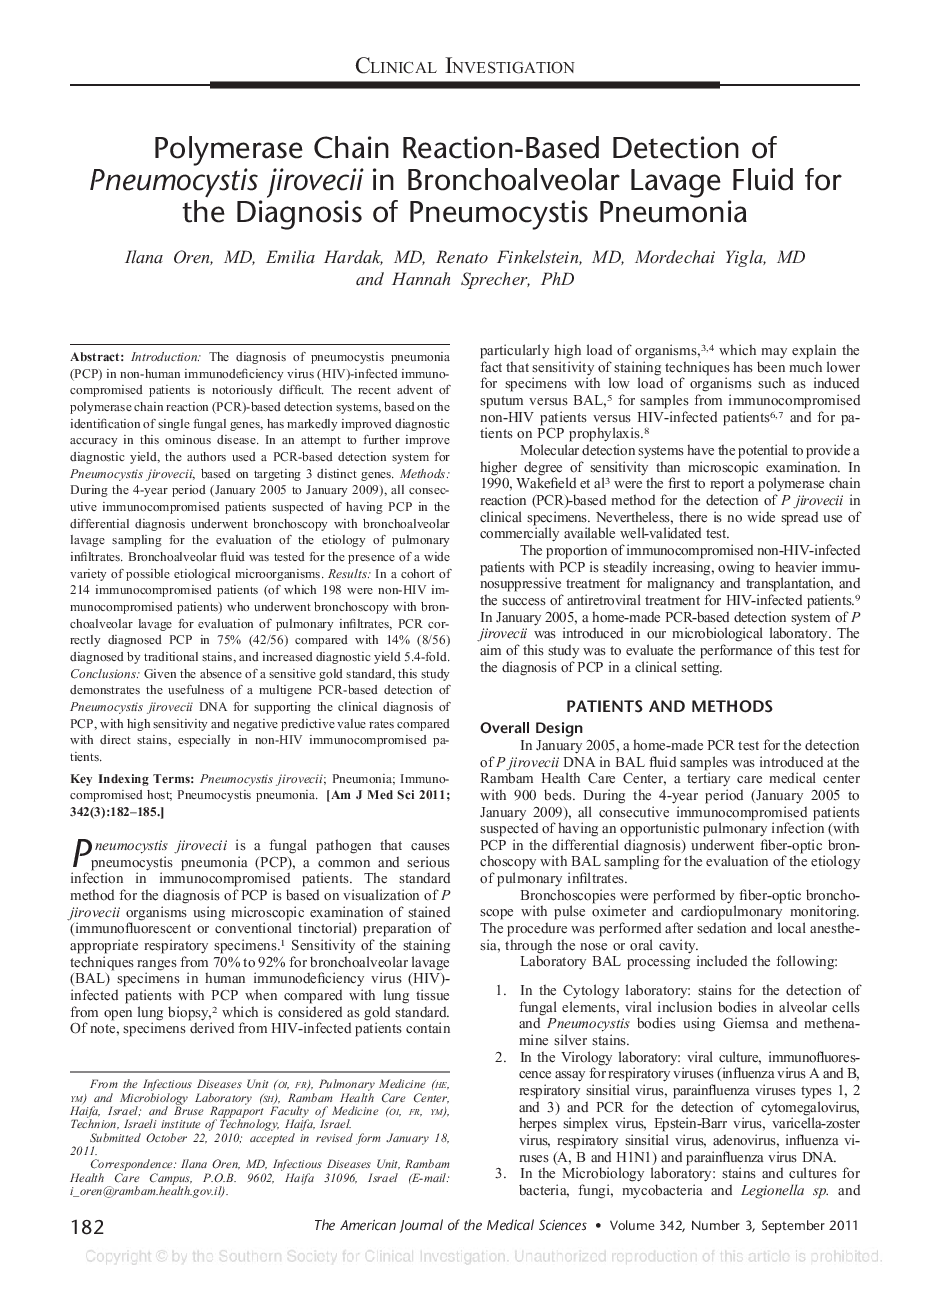 Polymerase Chain Reaction-Based Detection of Pneumocystis jirovecii in Bronchoalveolar Lavage Fluid for the Diagnosis of Pneumocystis Pneumonia